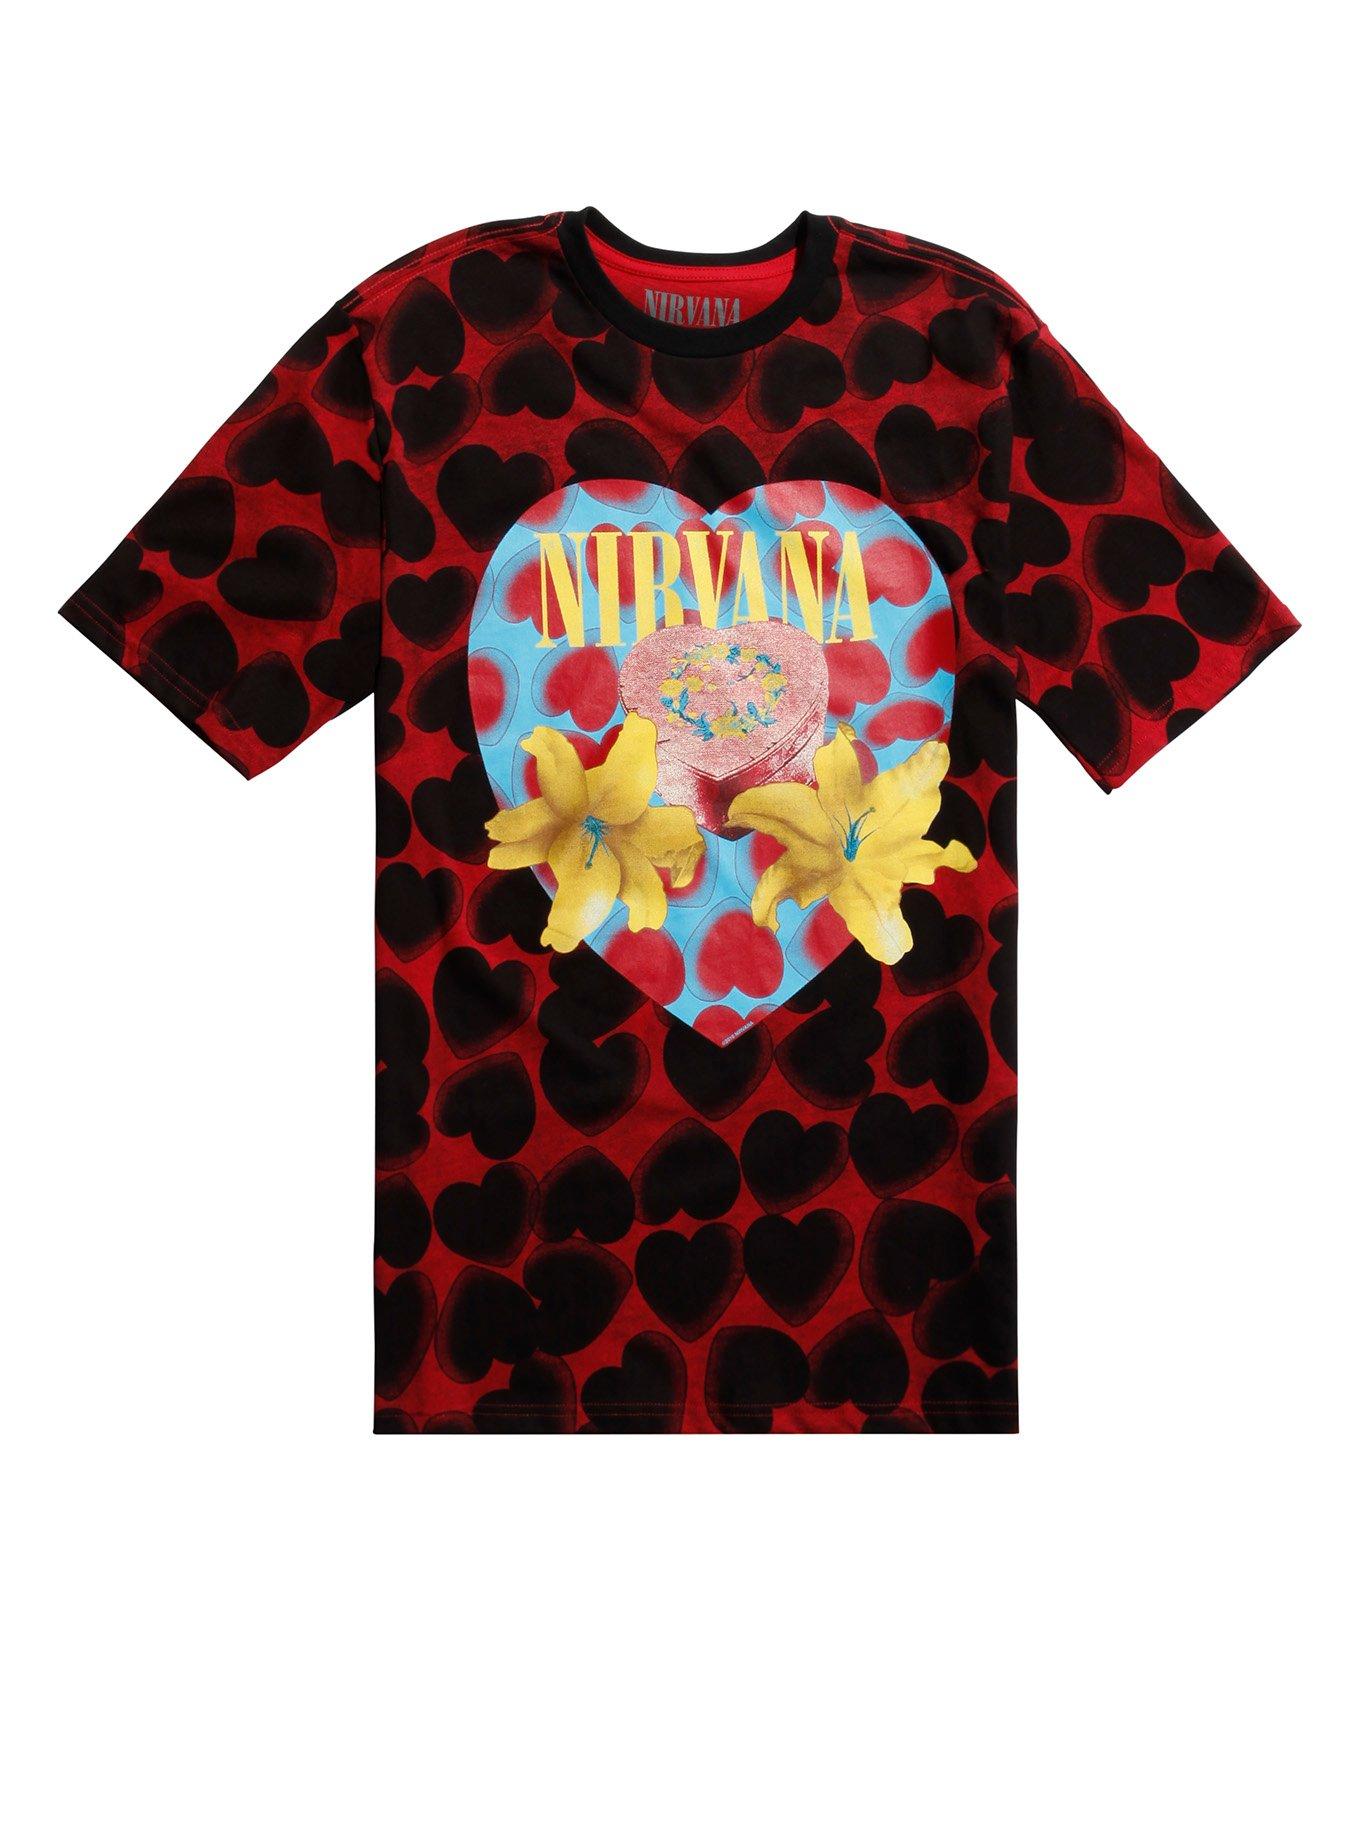 Skru ned henvise Calibre Nirvana Heart-Shaped Box Allover Print T-Shirt | Hot Topic